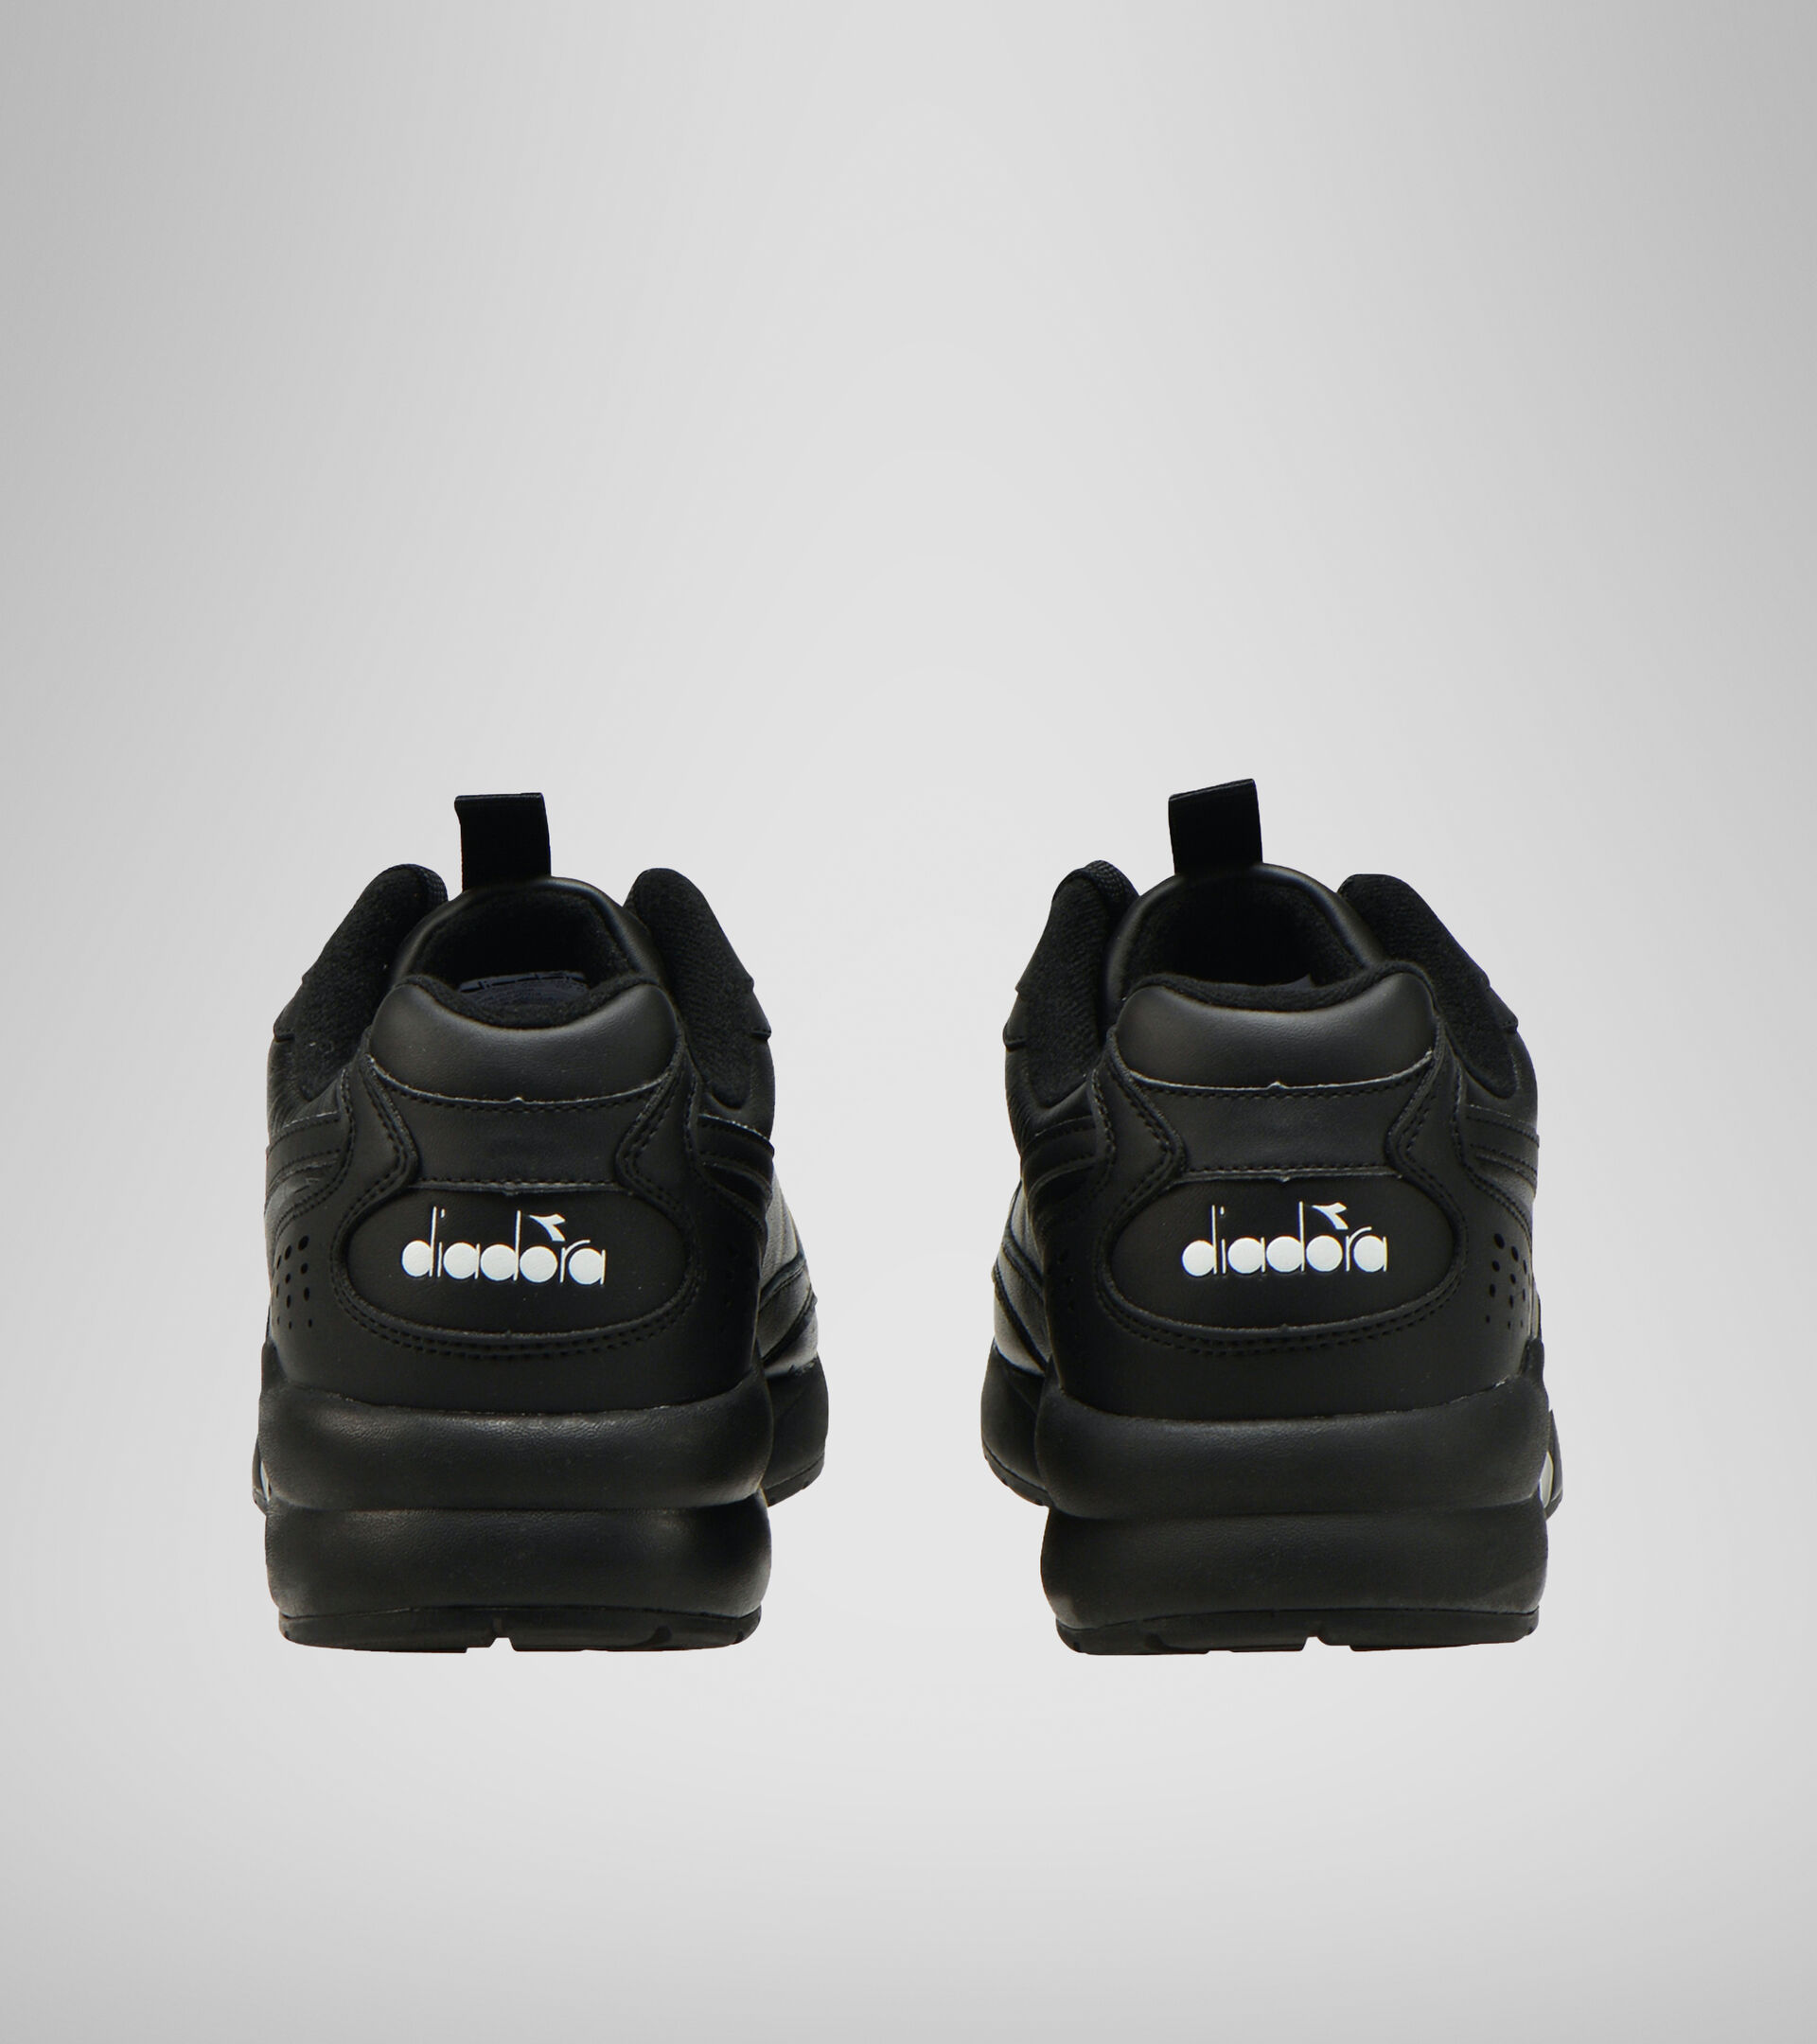 Sports shoe - Unisex DISTANCE 280 LEATHER BLACK /BLACK /BLACK - Diadora